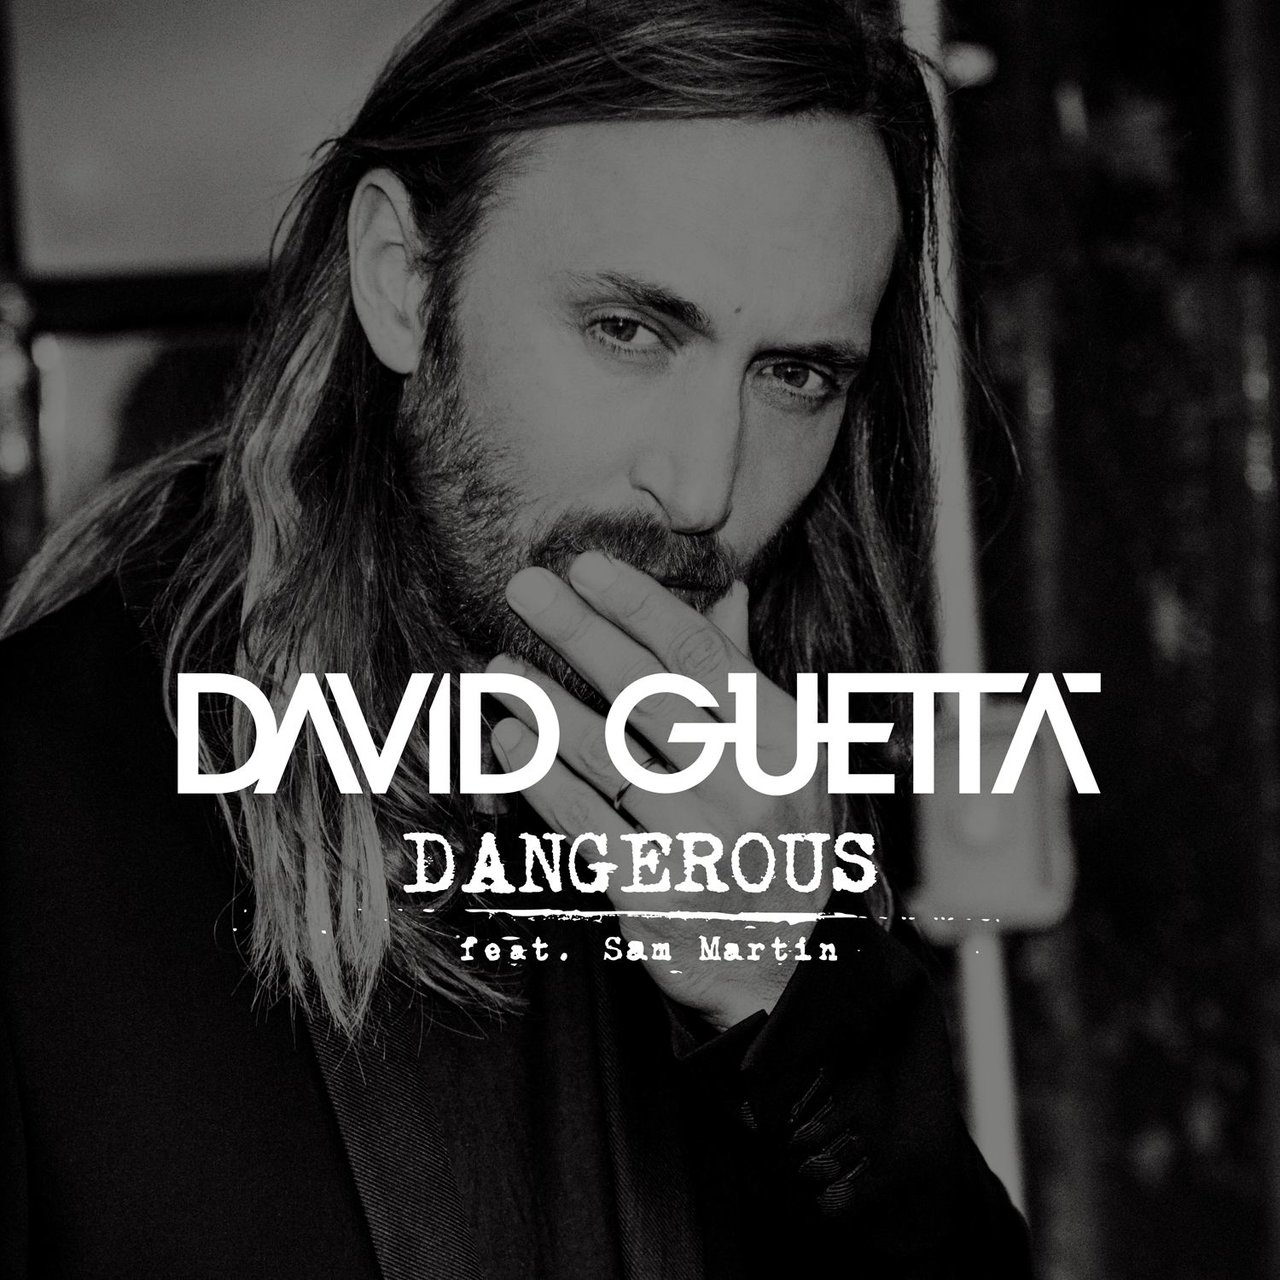 David Guetta ft. featuring Sam Martin Dangerous cover artwork